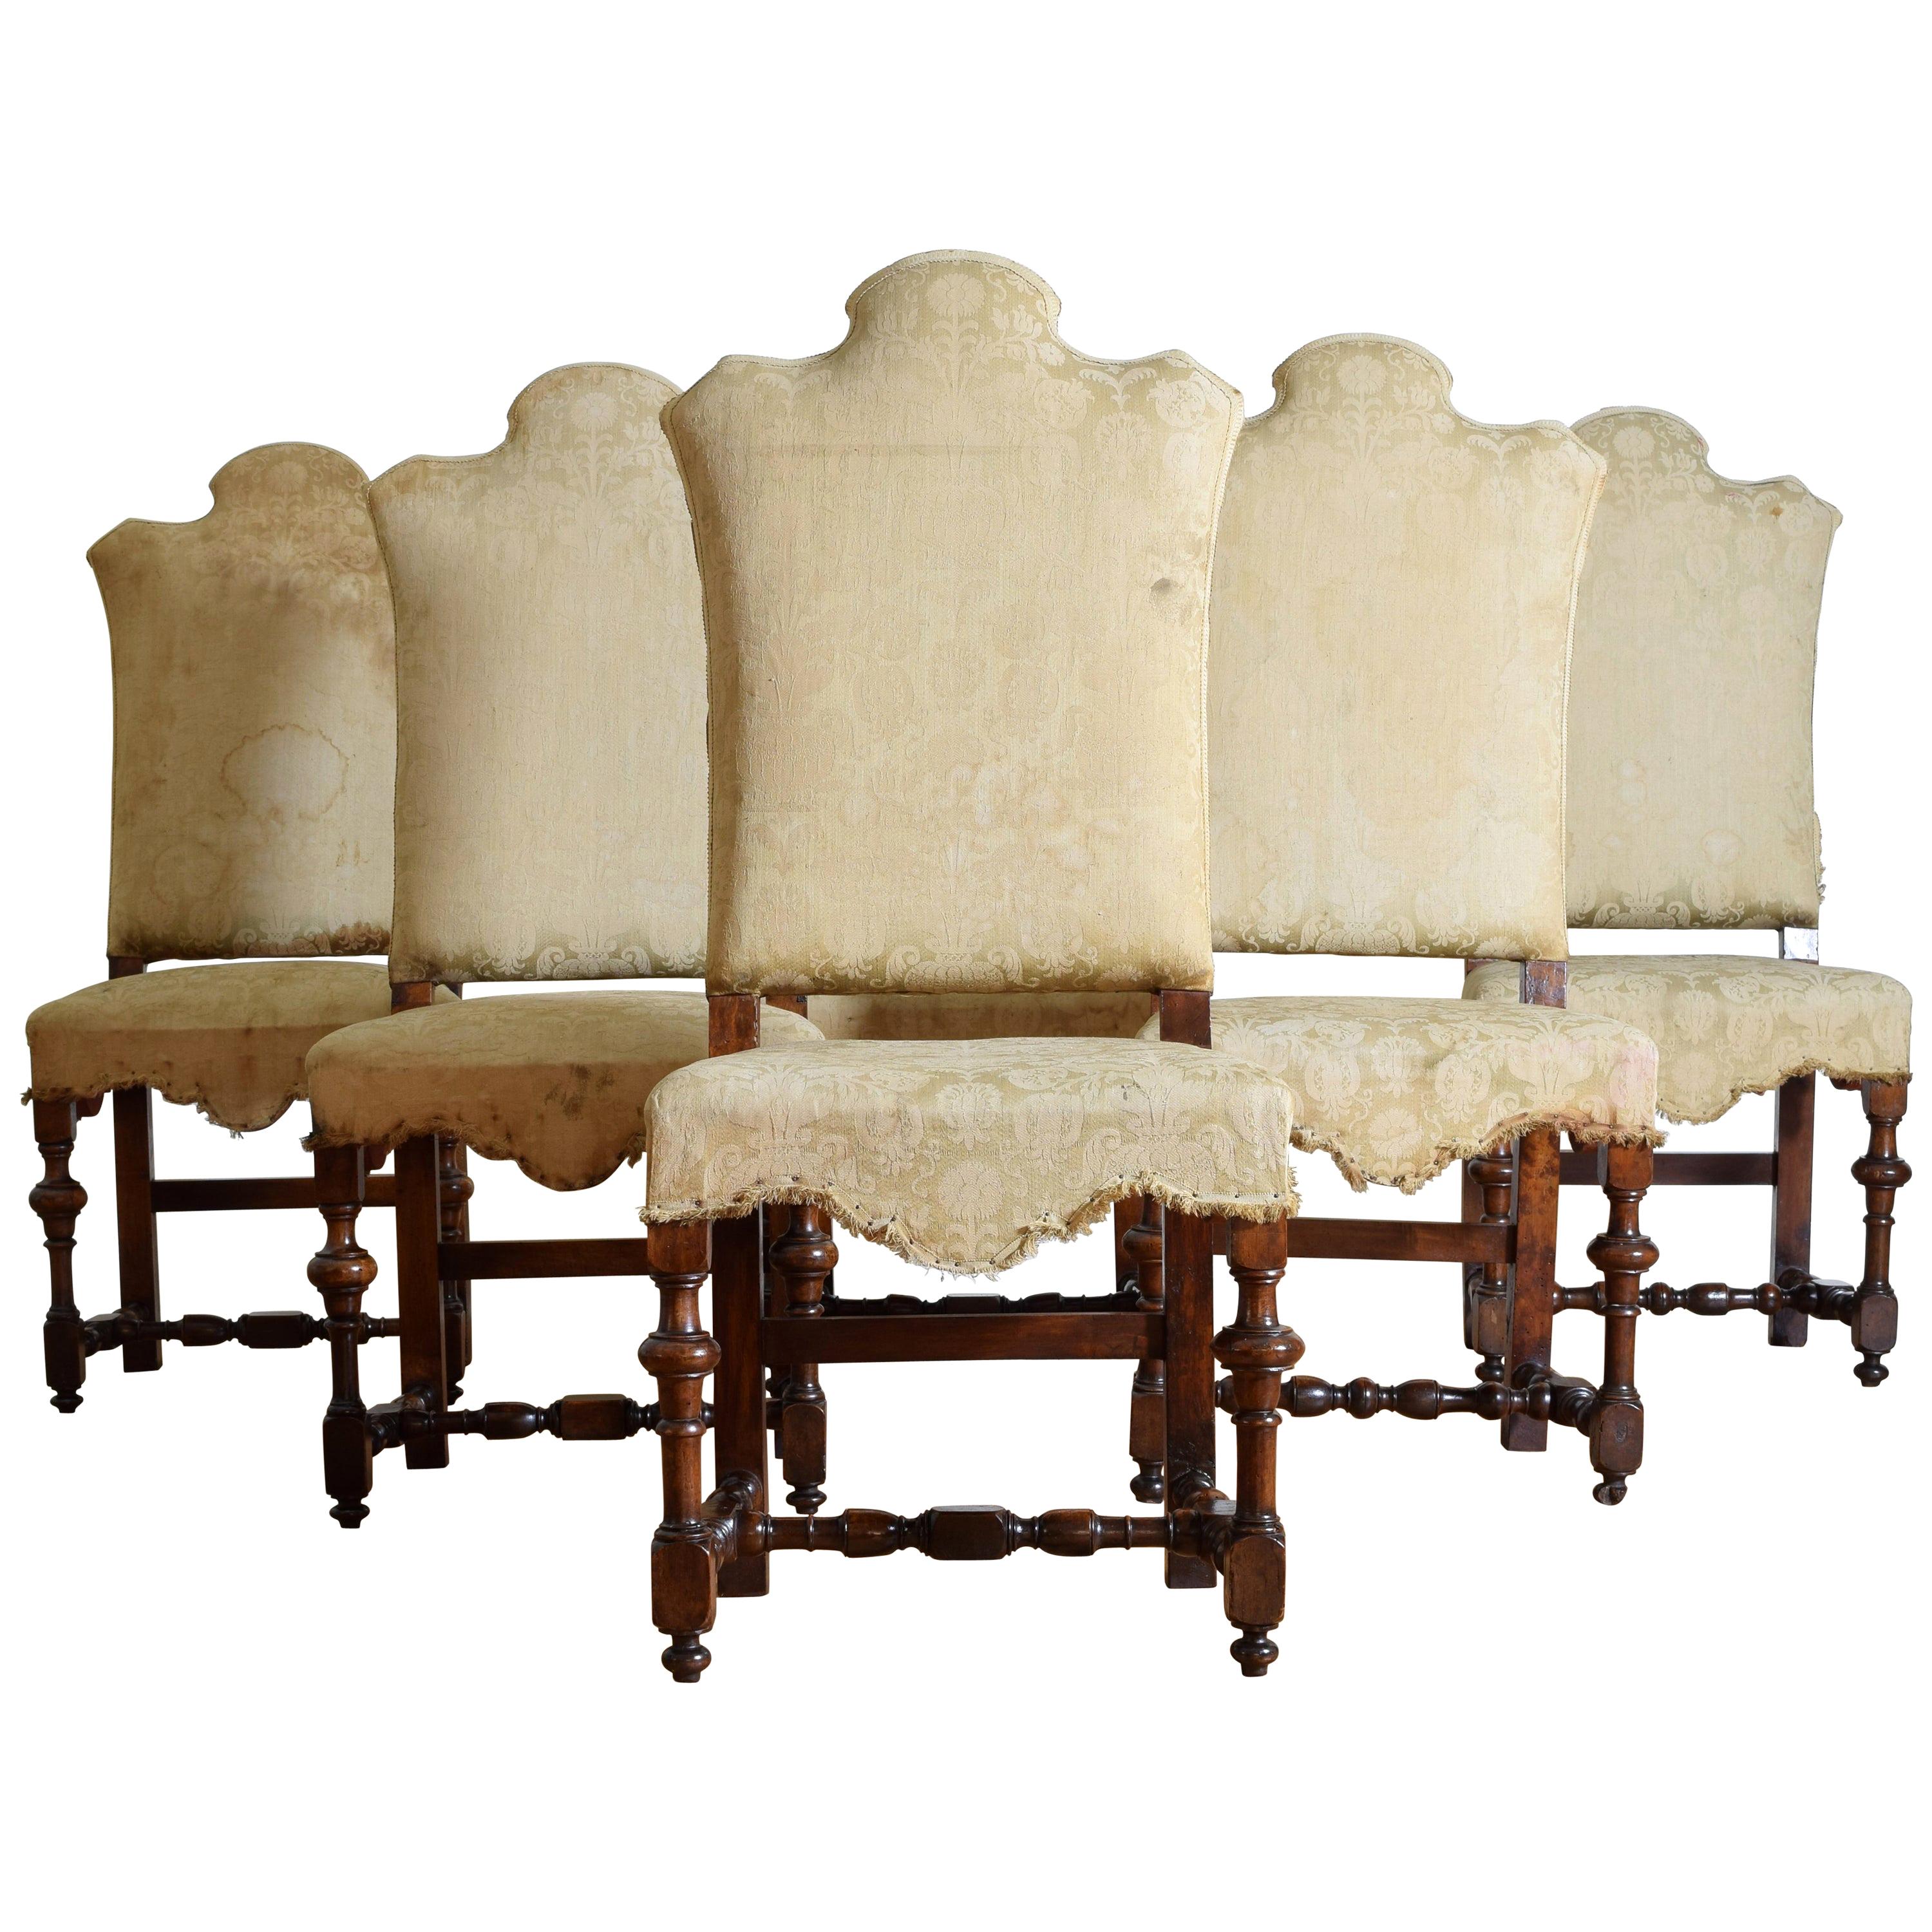 Italian Baroque Period Set of Six Turned Walnut Dining Chairs, 18th Century